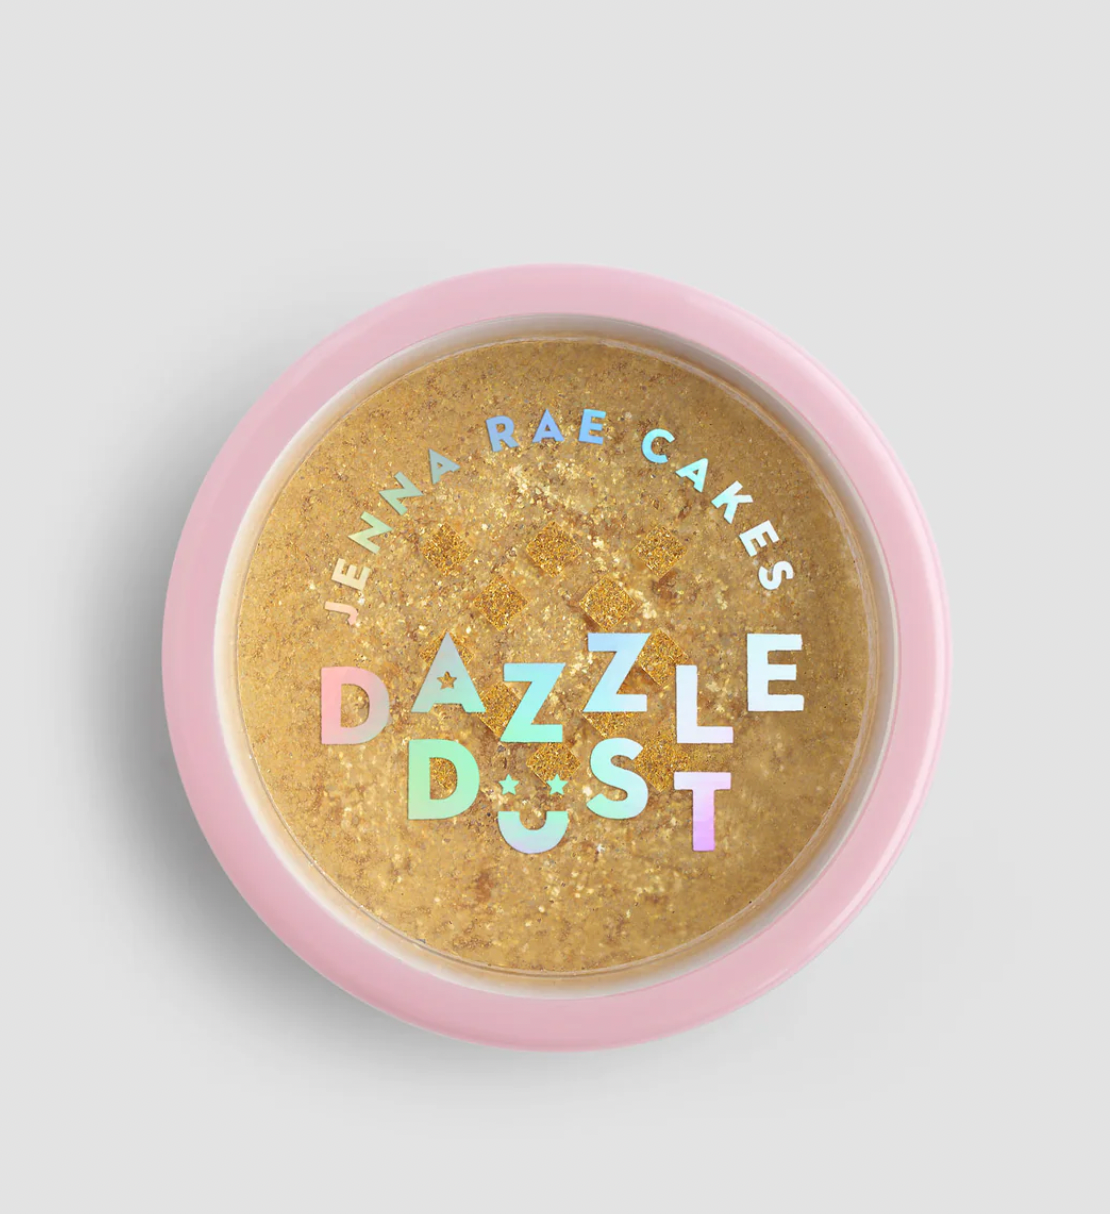 Jenna Rae Cakes Edible Glitter Dazzle Dust